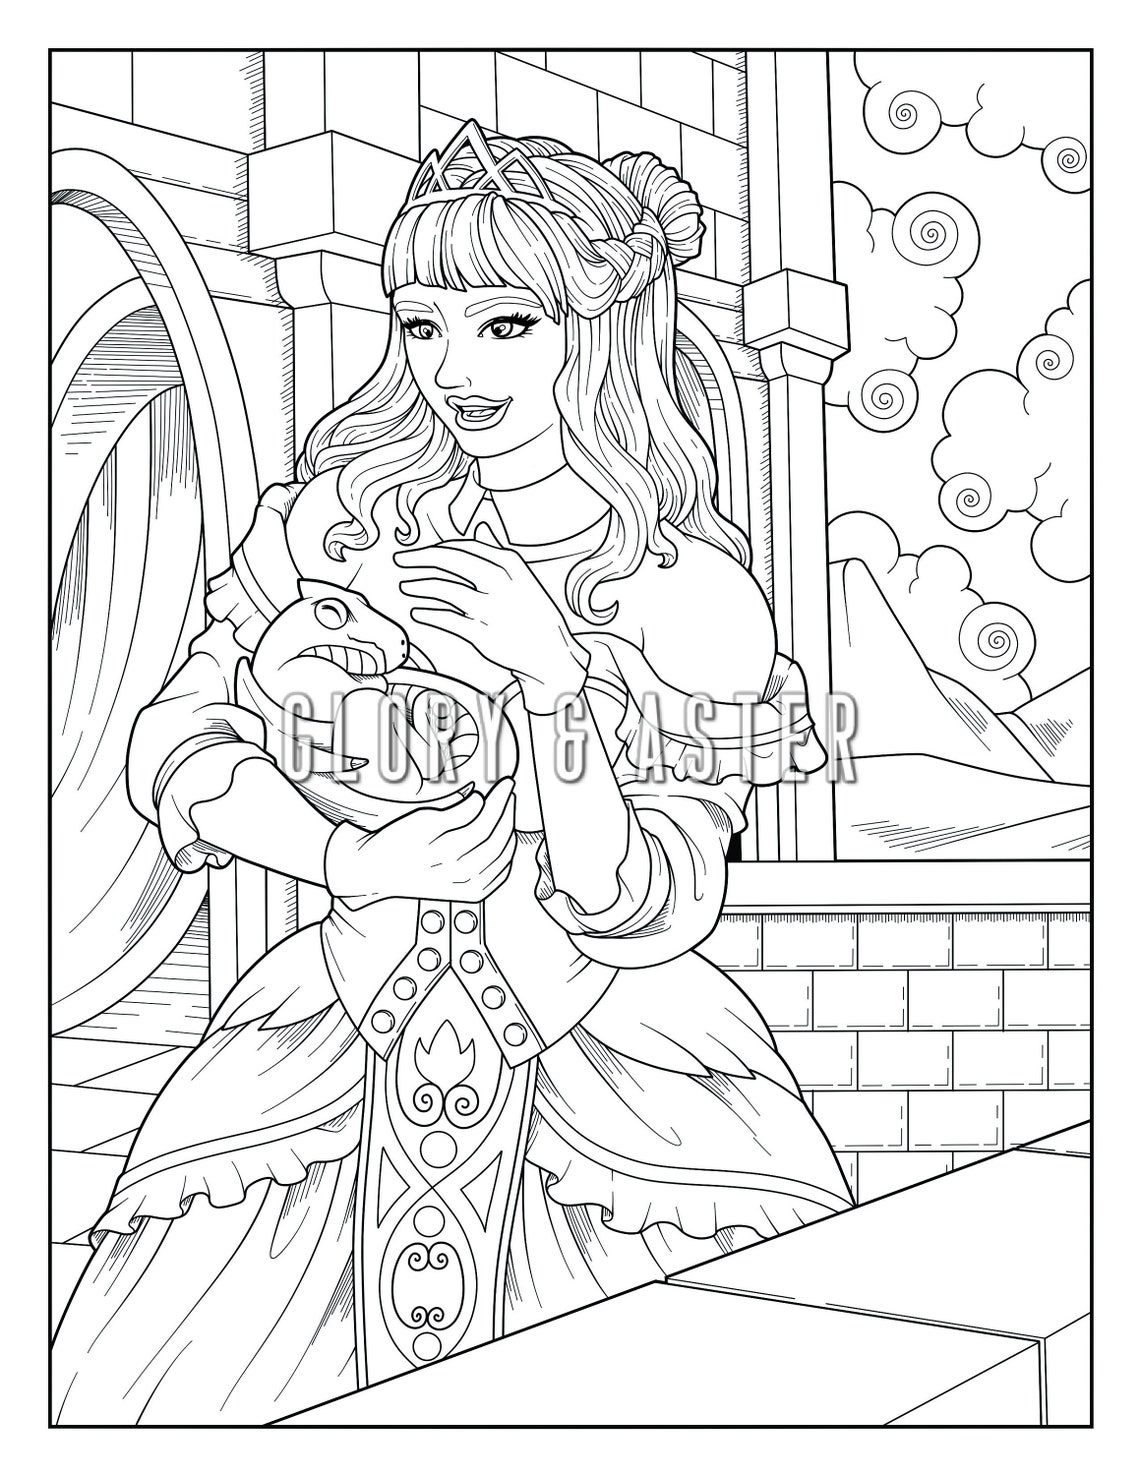 Baby Dragon Princess Coloring Page Printable Adult Coloring | Etsy